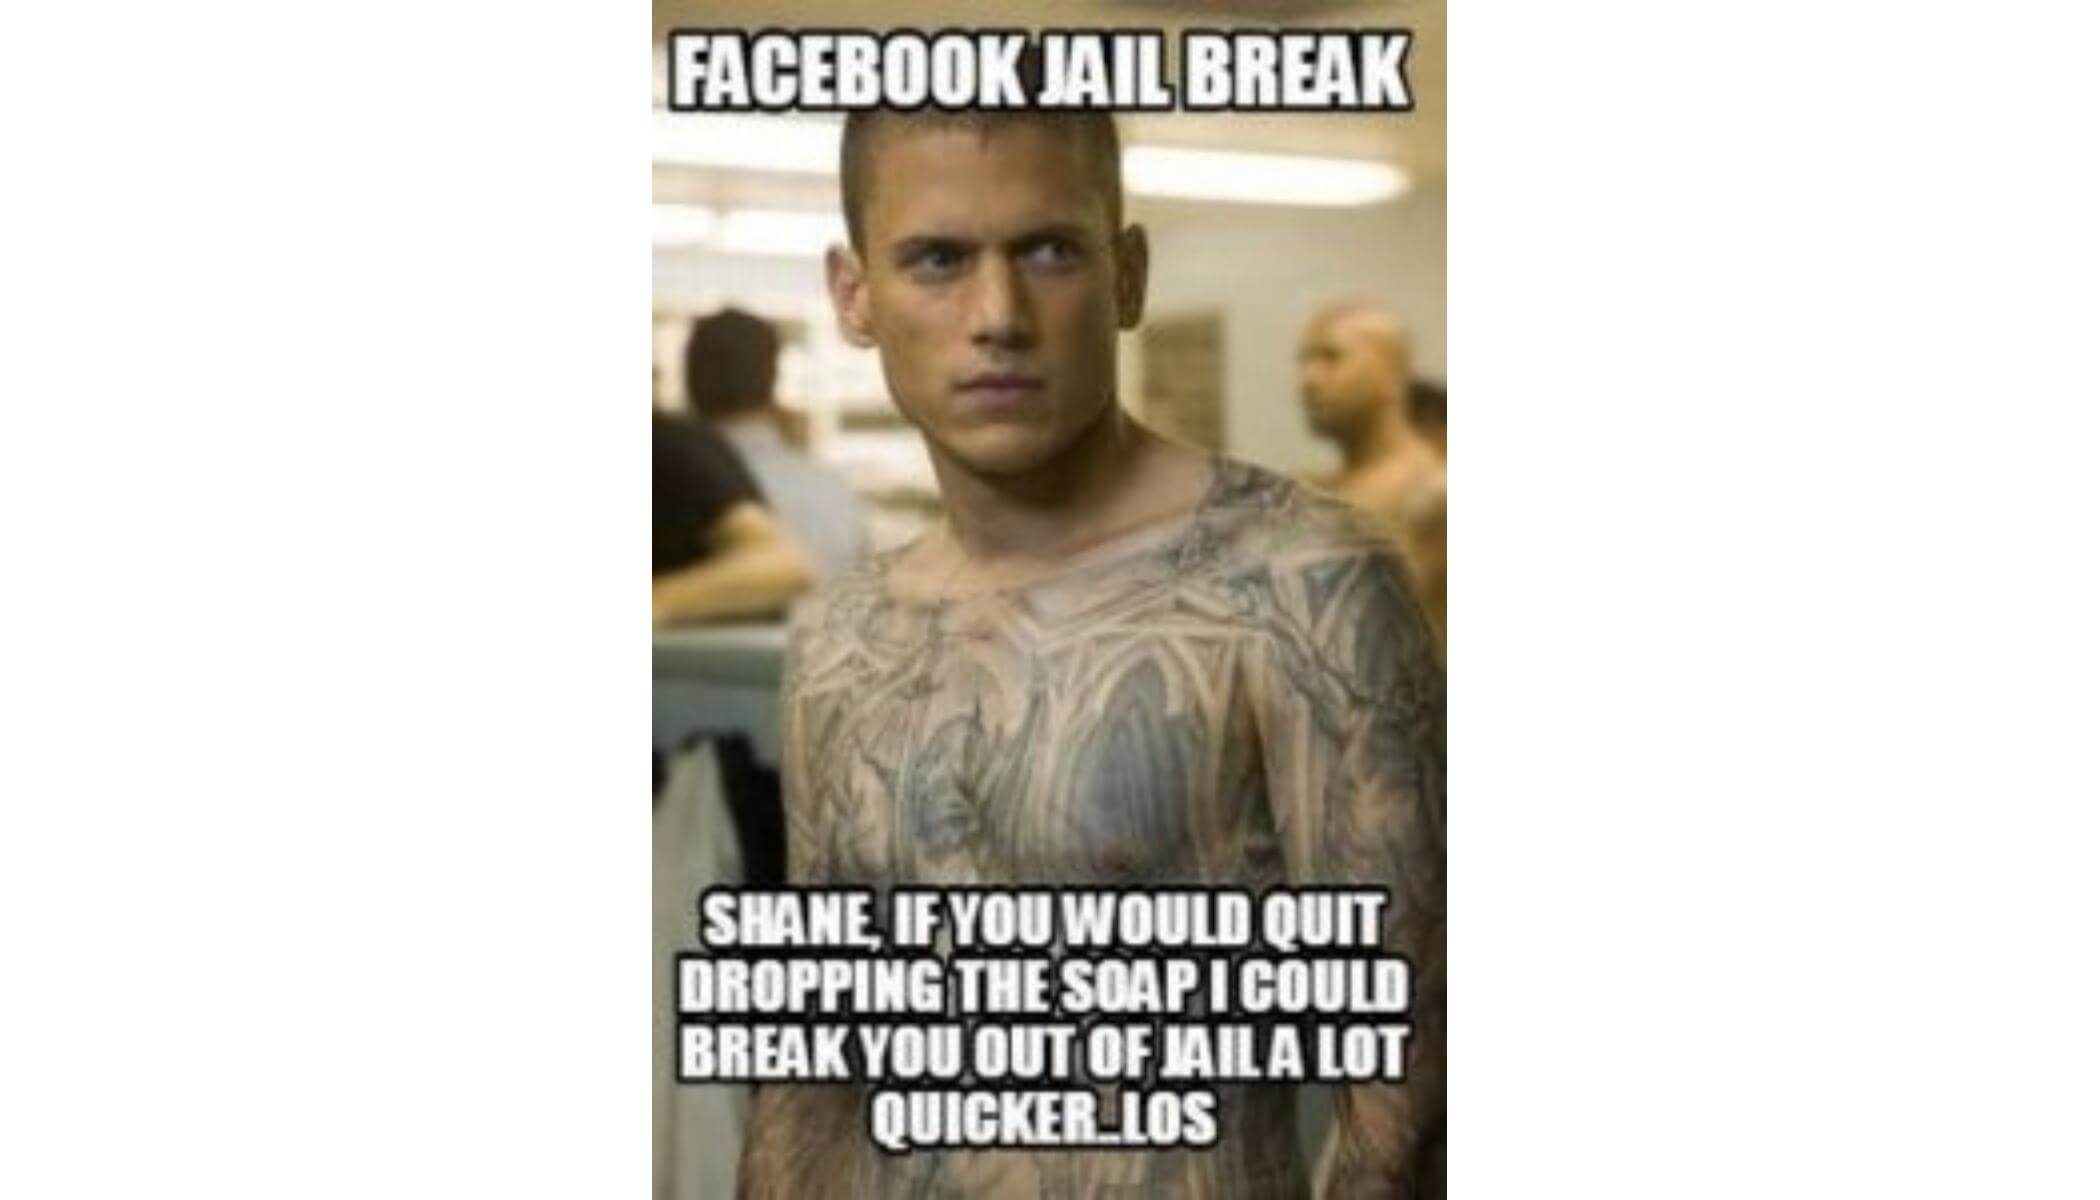 Facebook meme with prison break